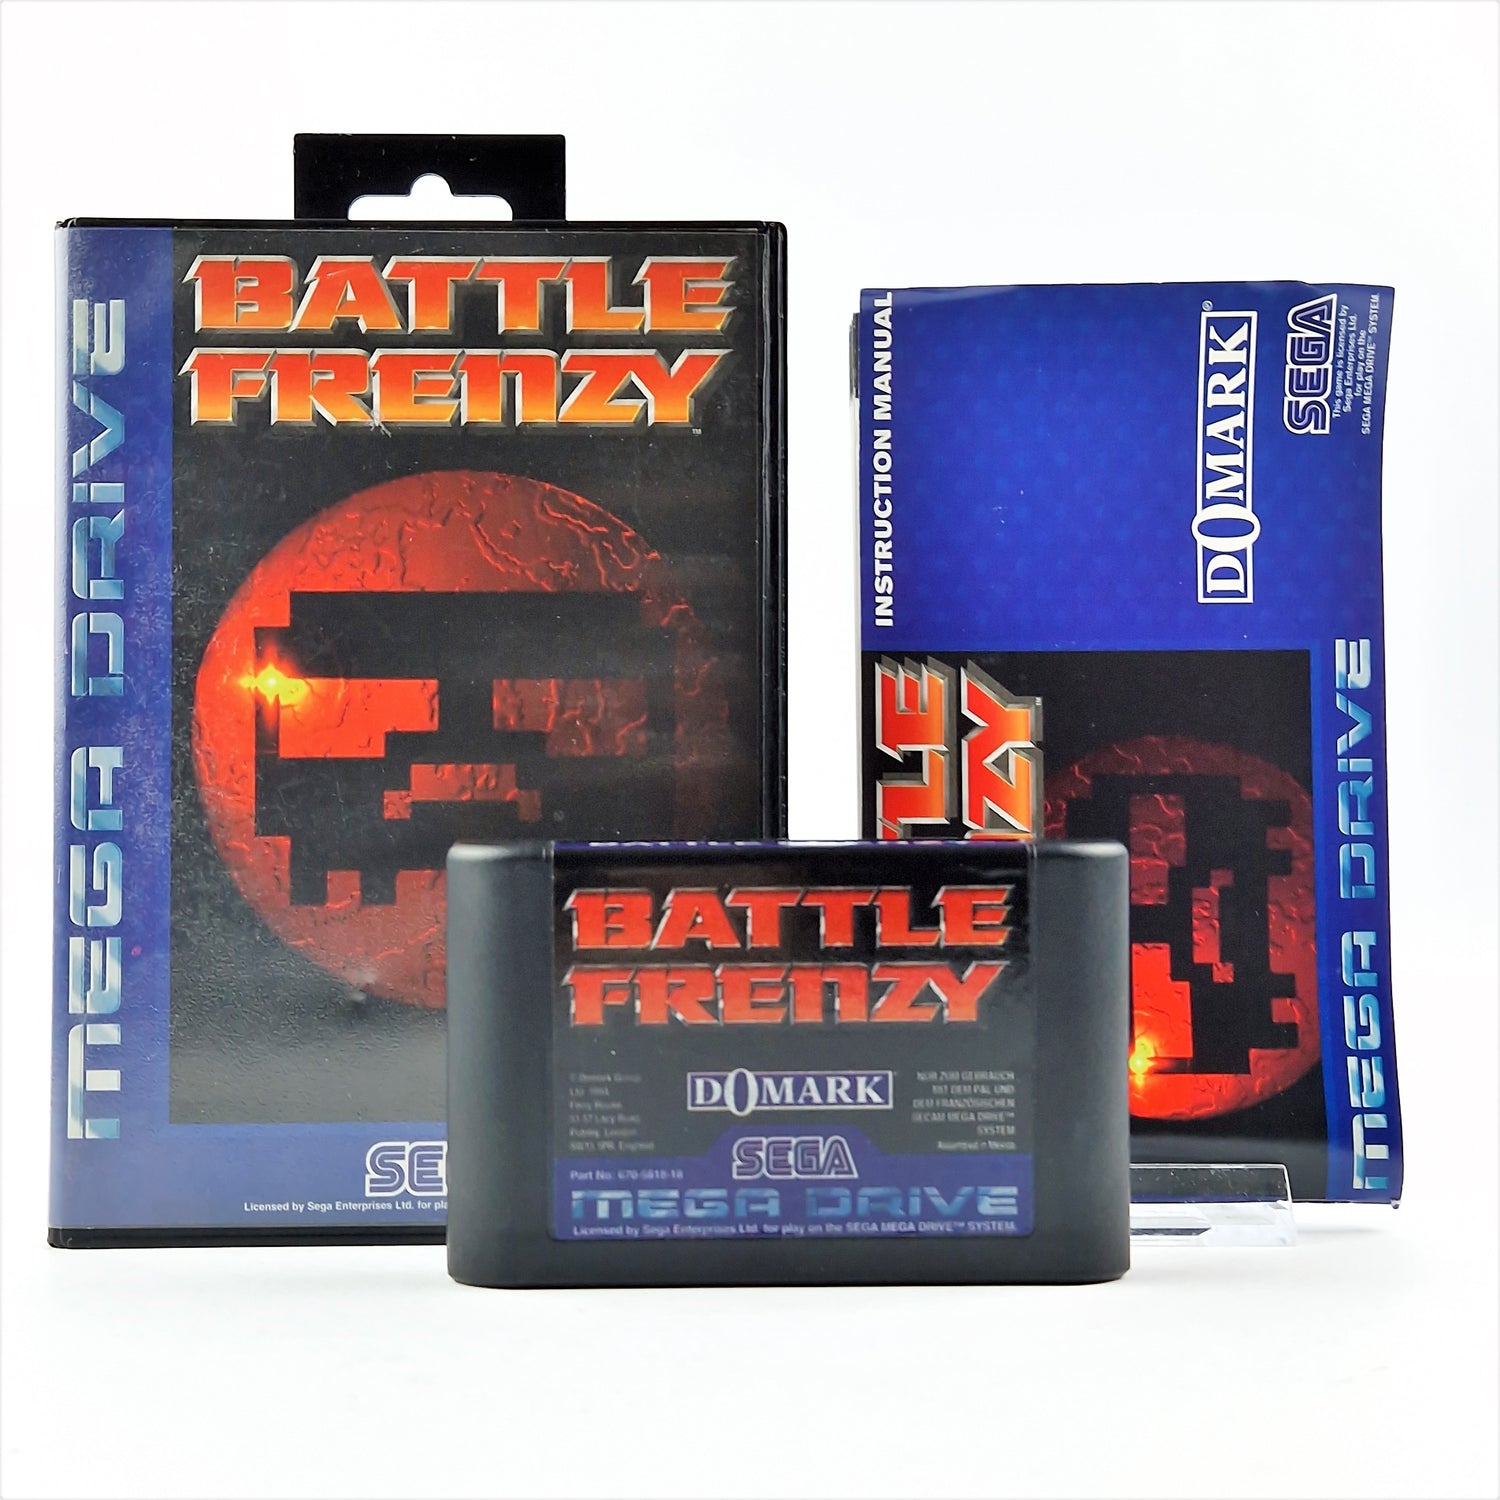 Sega Mega Drive Game: Battle Frenzy - Module Instructions OVP cib / PAL MD